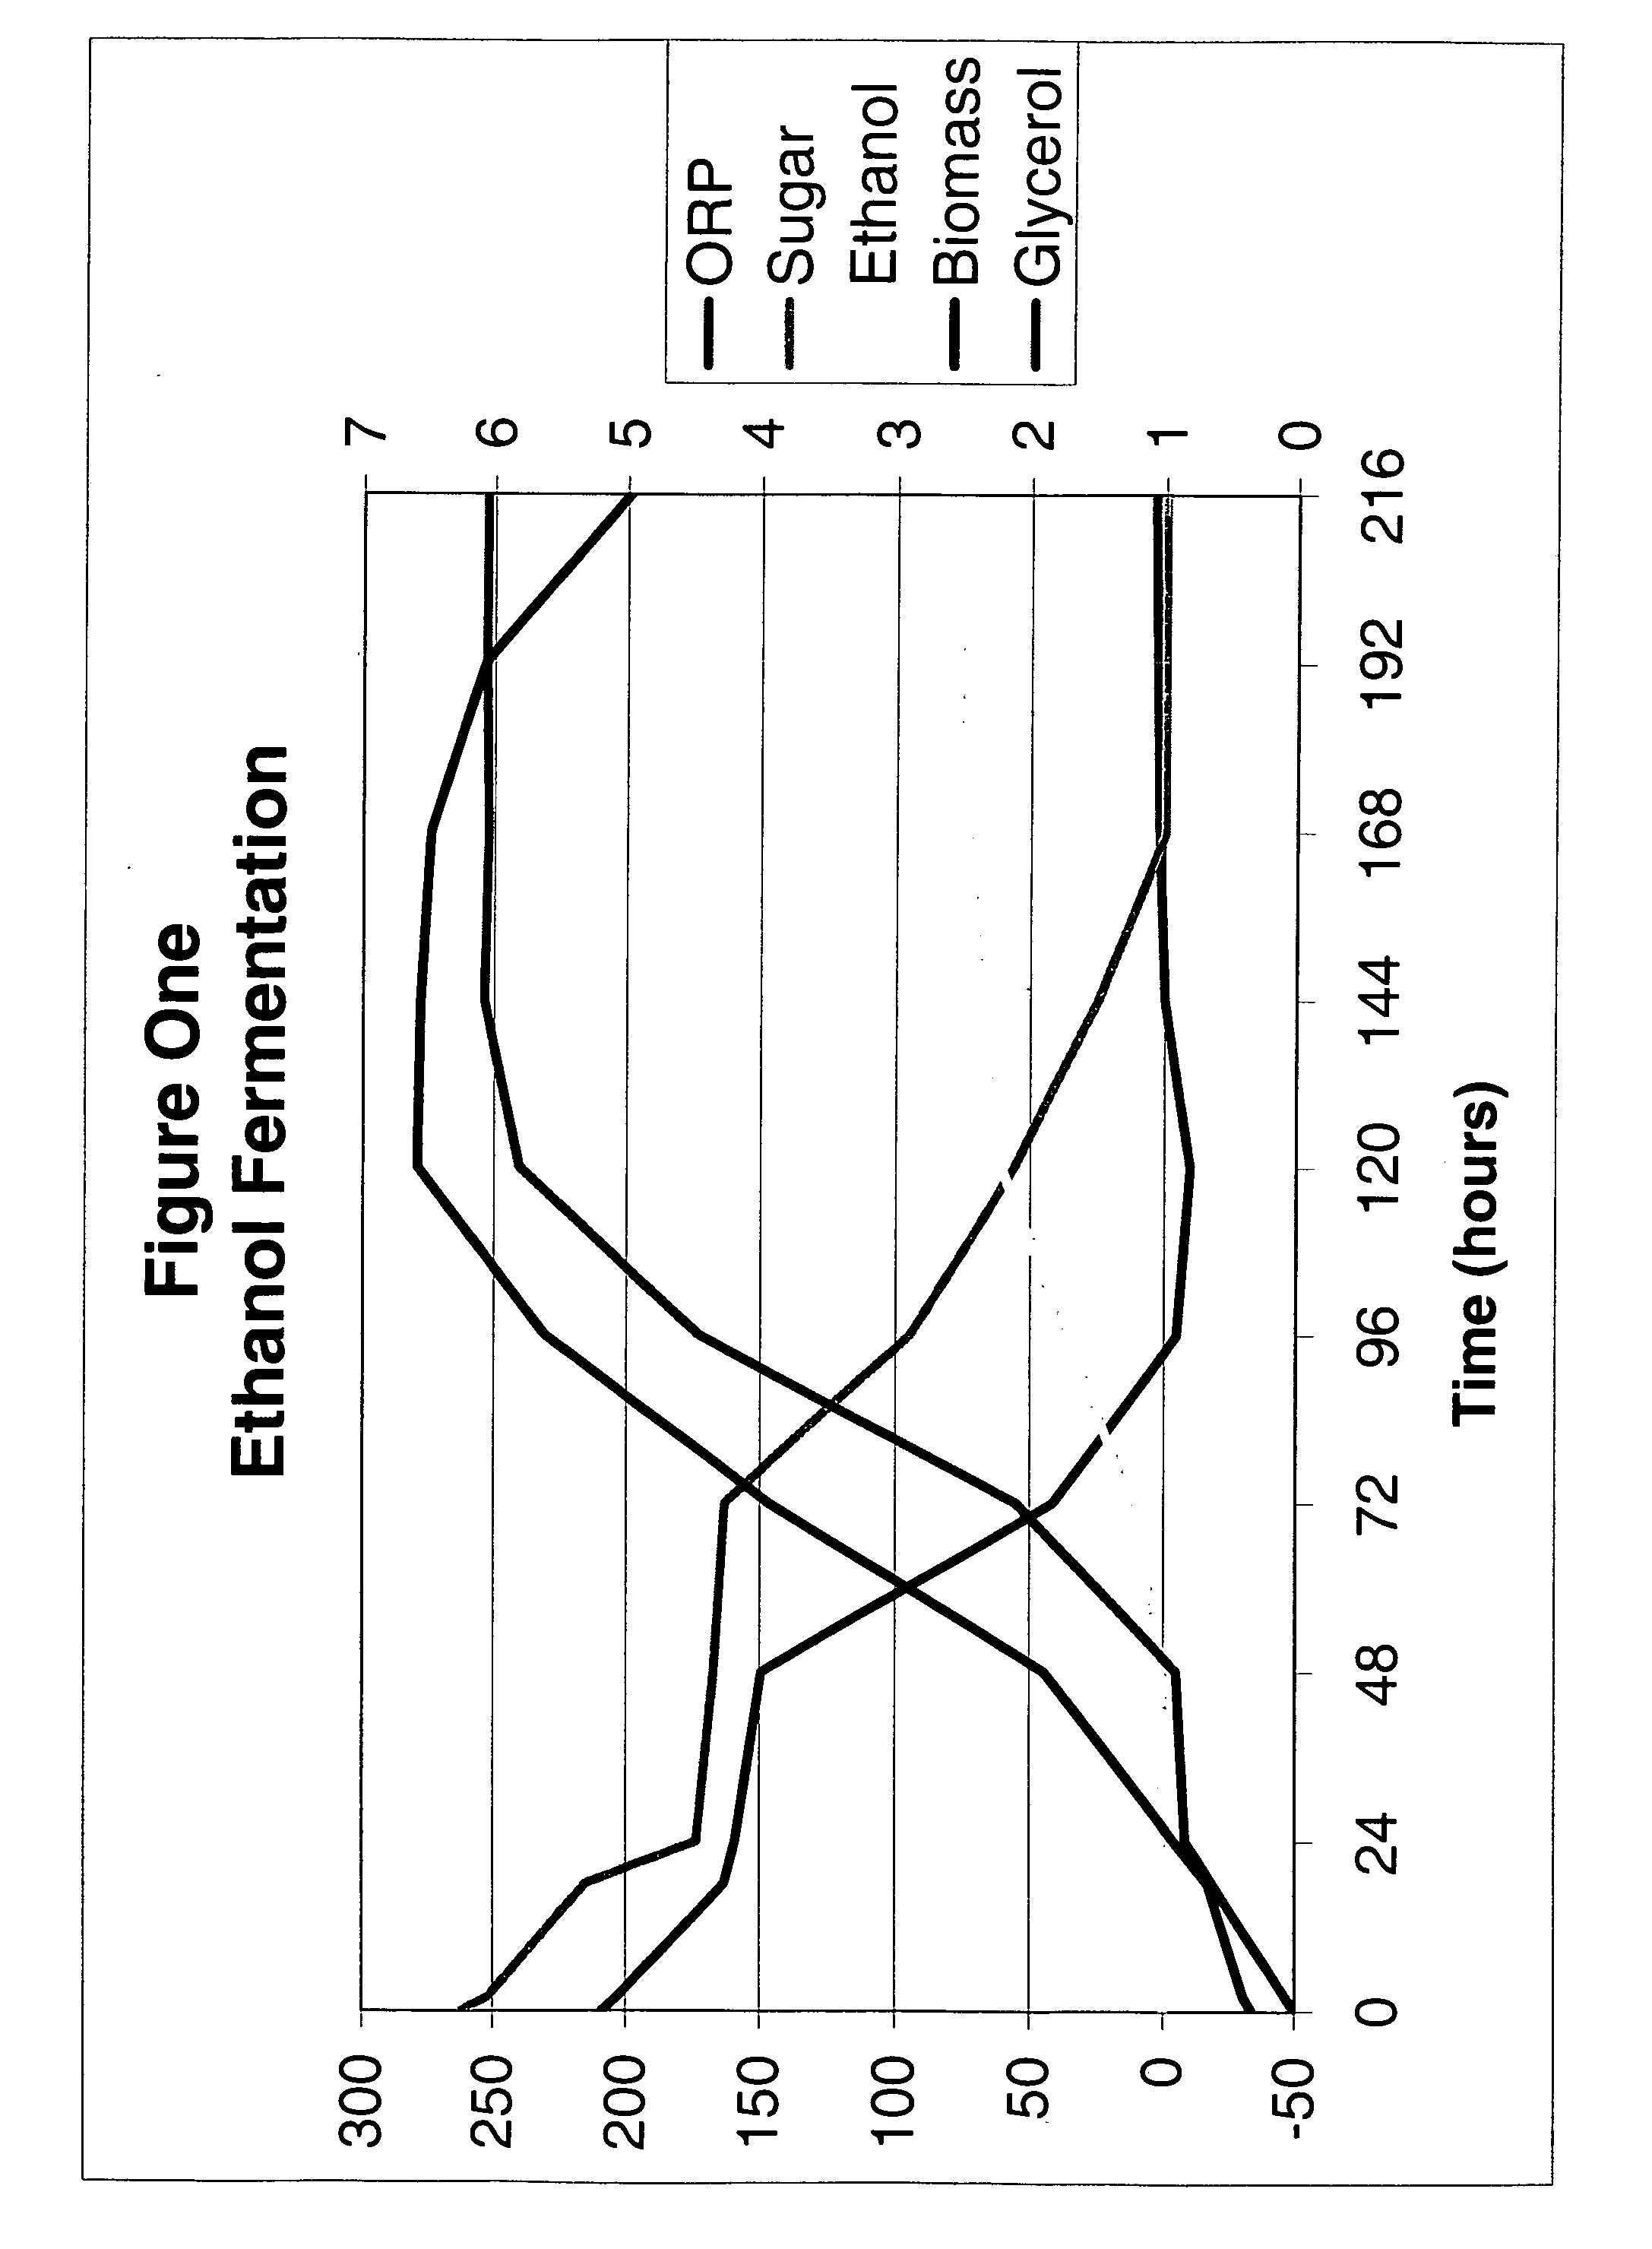 Ethanol fermentation using oxidation reduction potential